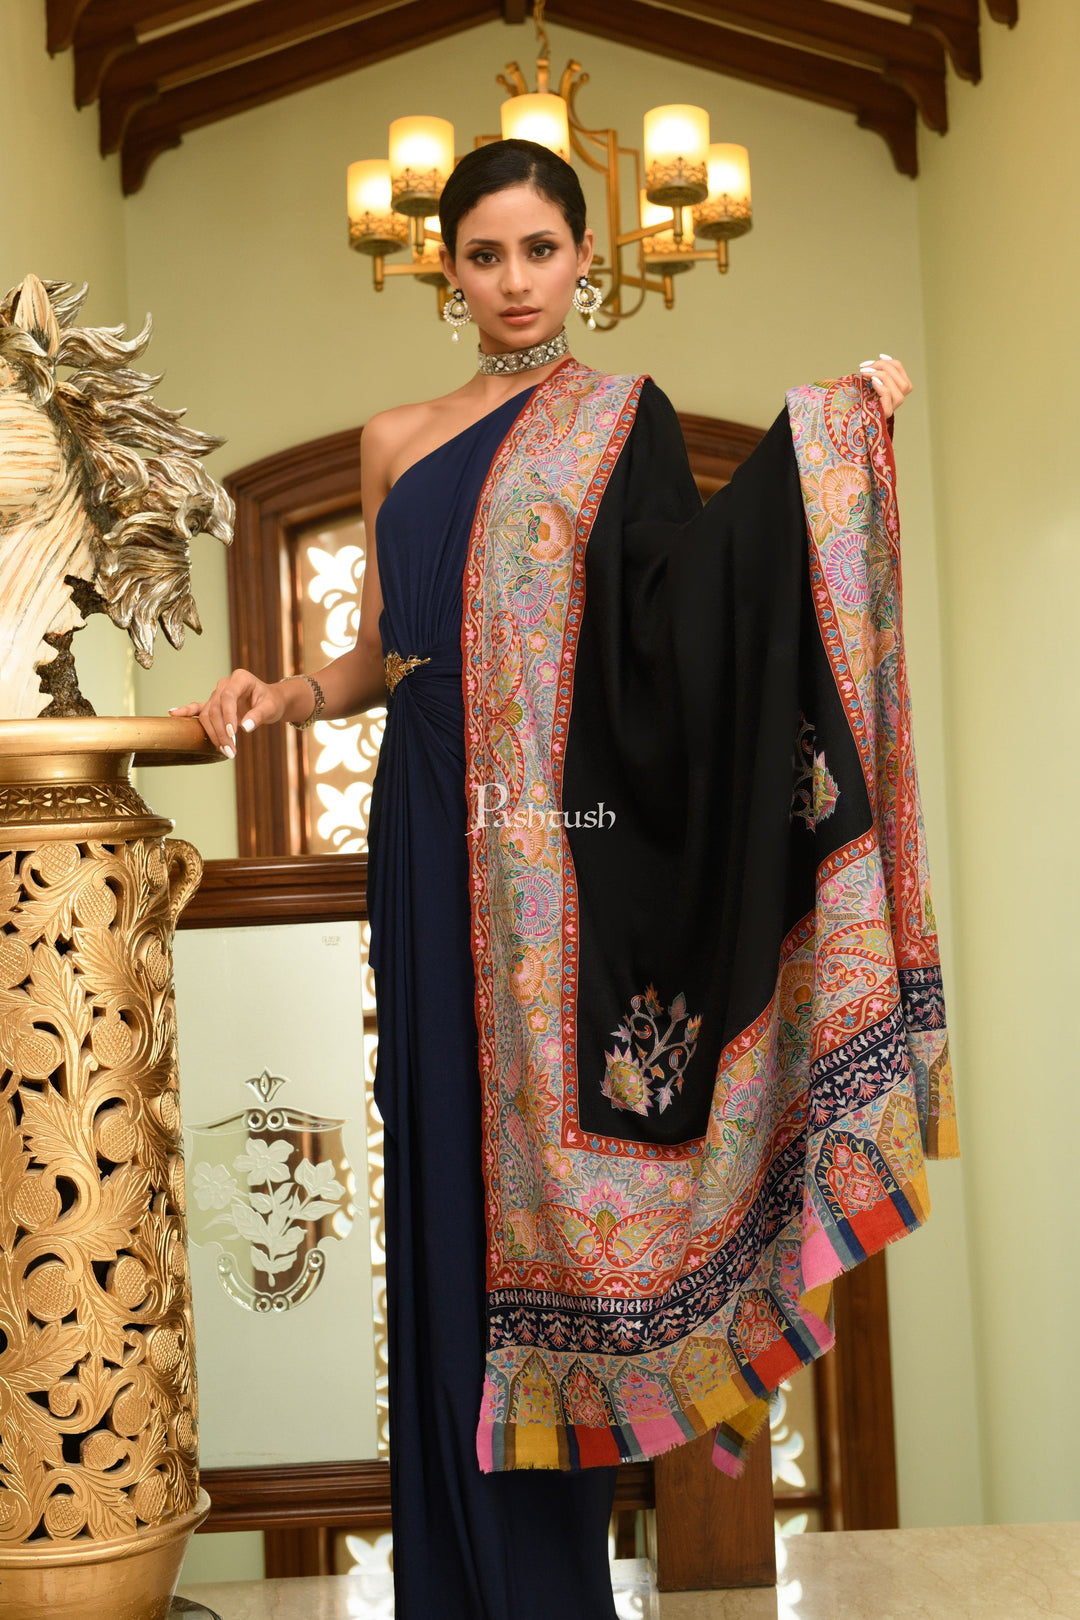 Pashtush India Womens Shawls Pashtush Womens Pure Pashmina Shawl, Hand Painted And Embroidered Kalamkari Palla Design, Black